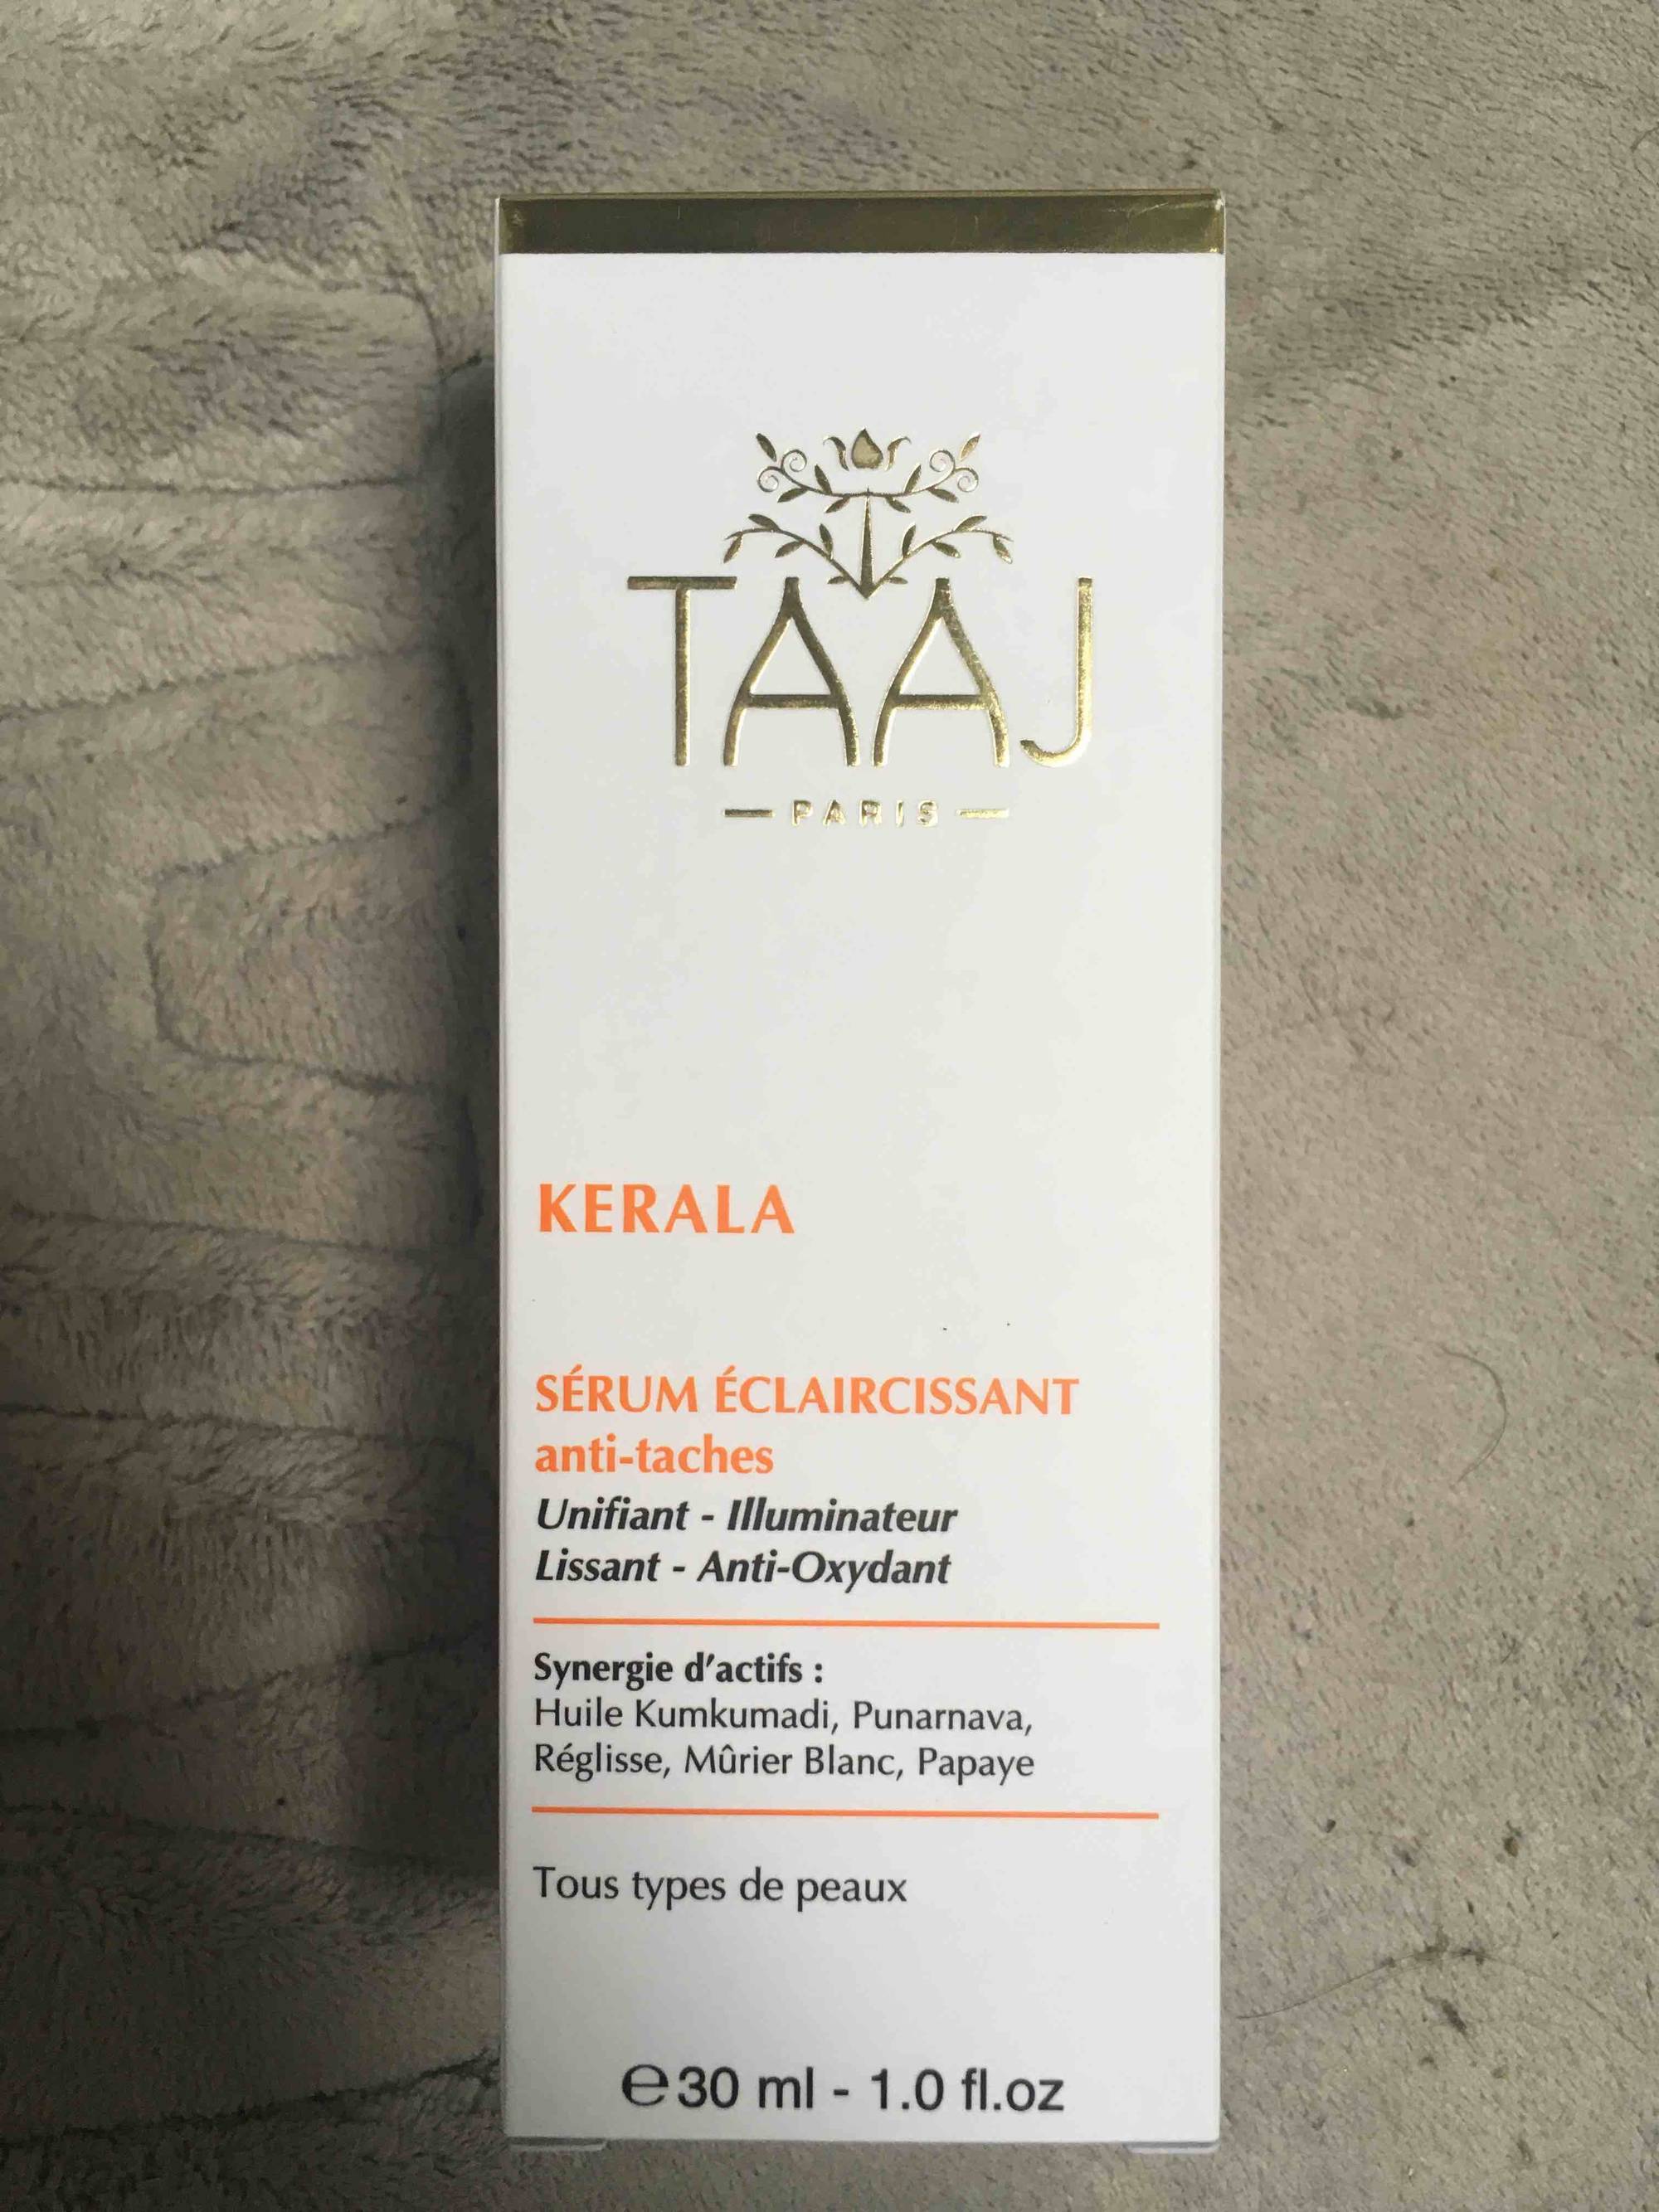 TAAJ - Kerala - Sérum éclaircissant anti-tâches